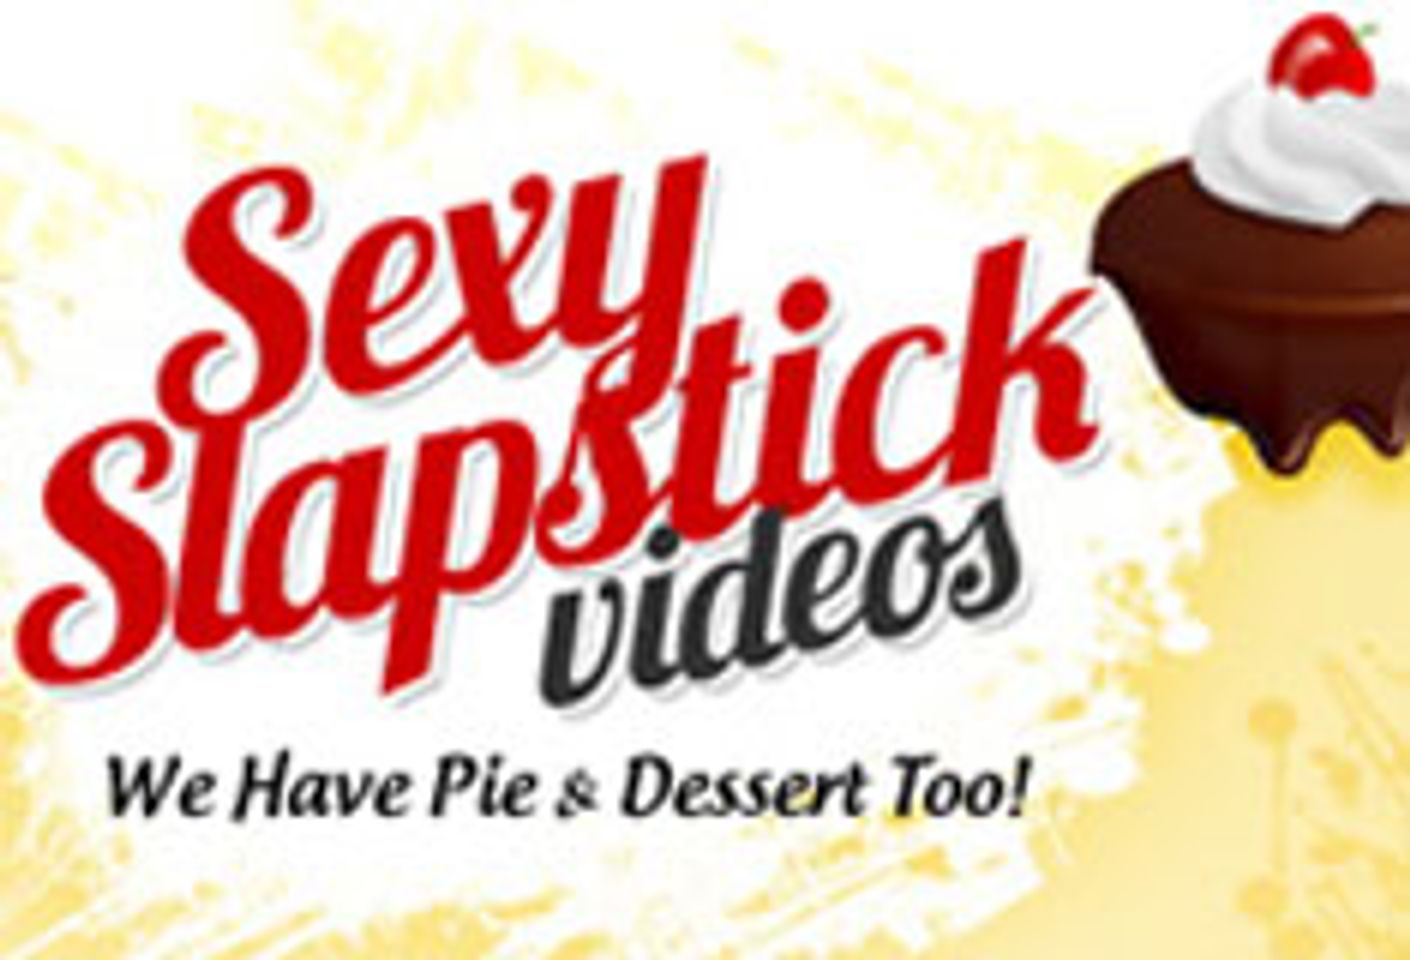 SexySlapstickVideos.com Celebrates 'Sploshing'